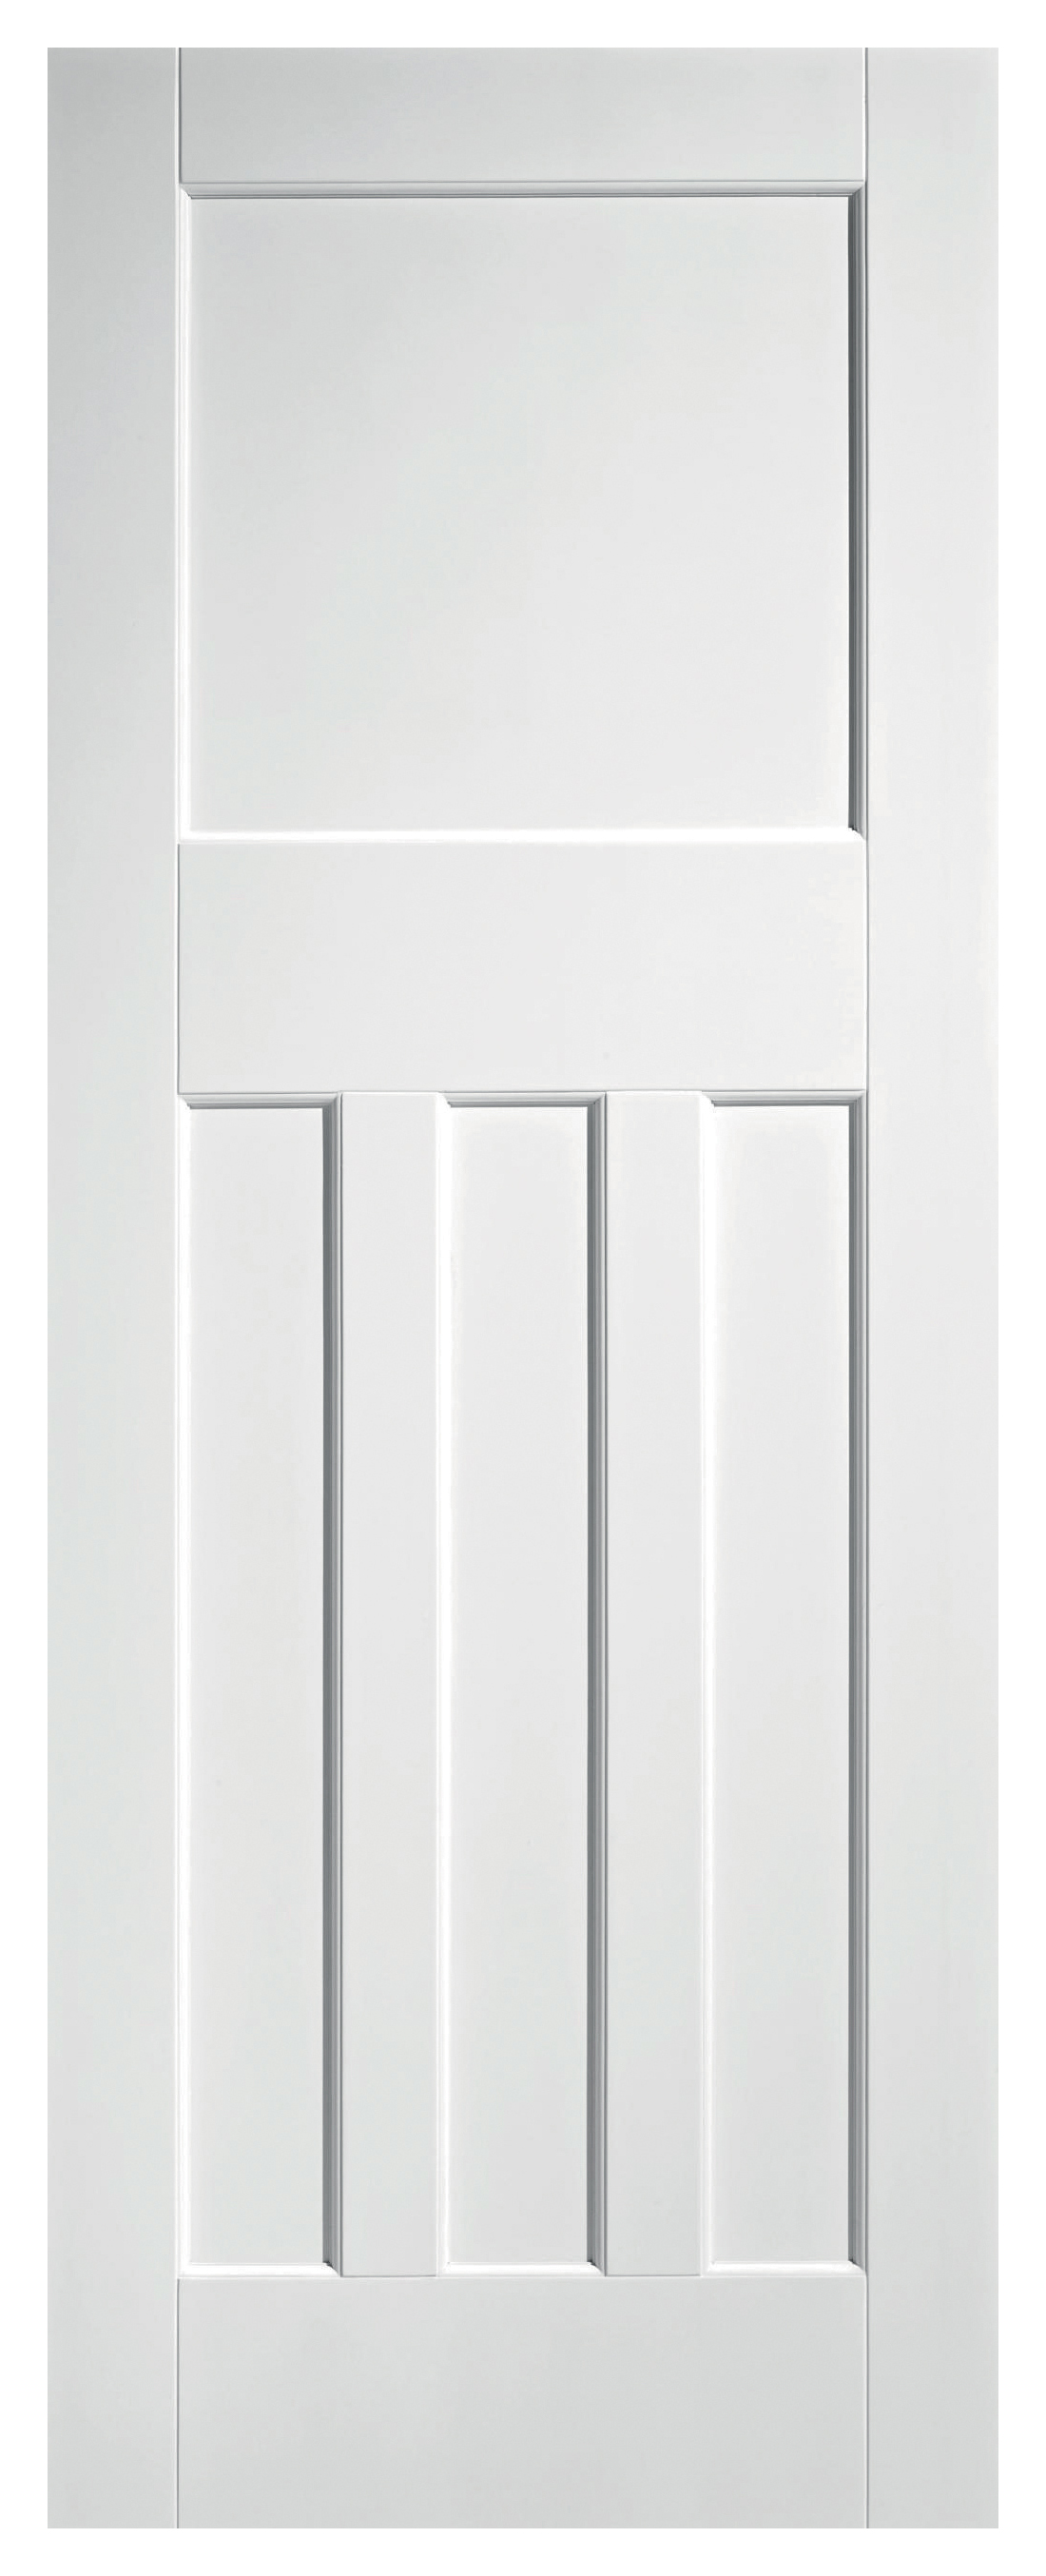 Image of LPD Internal DX 30s Primed White FD30 Fire Door - 826 x 2040mm